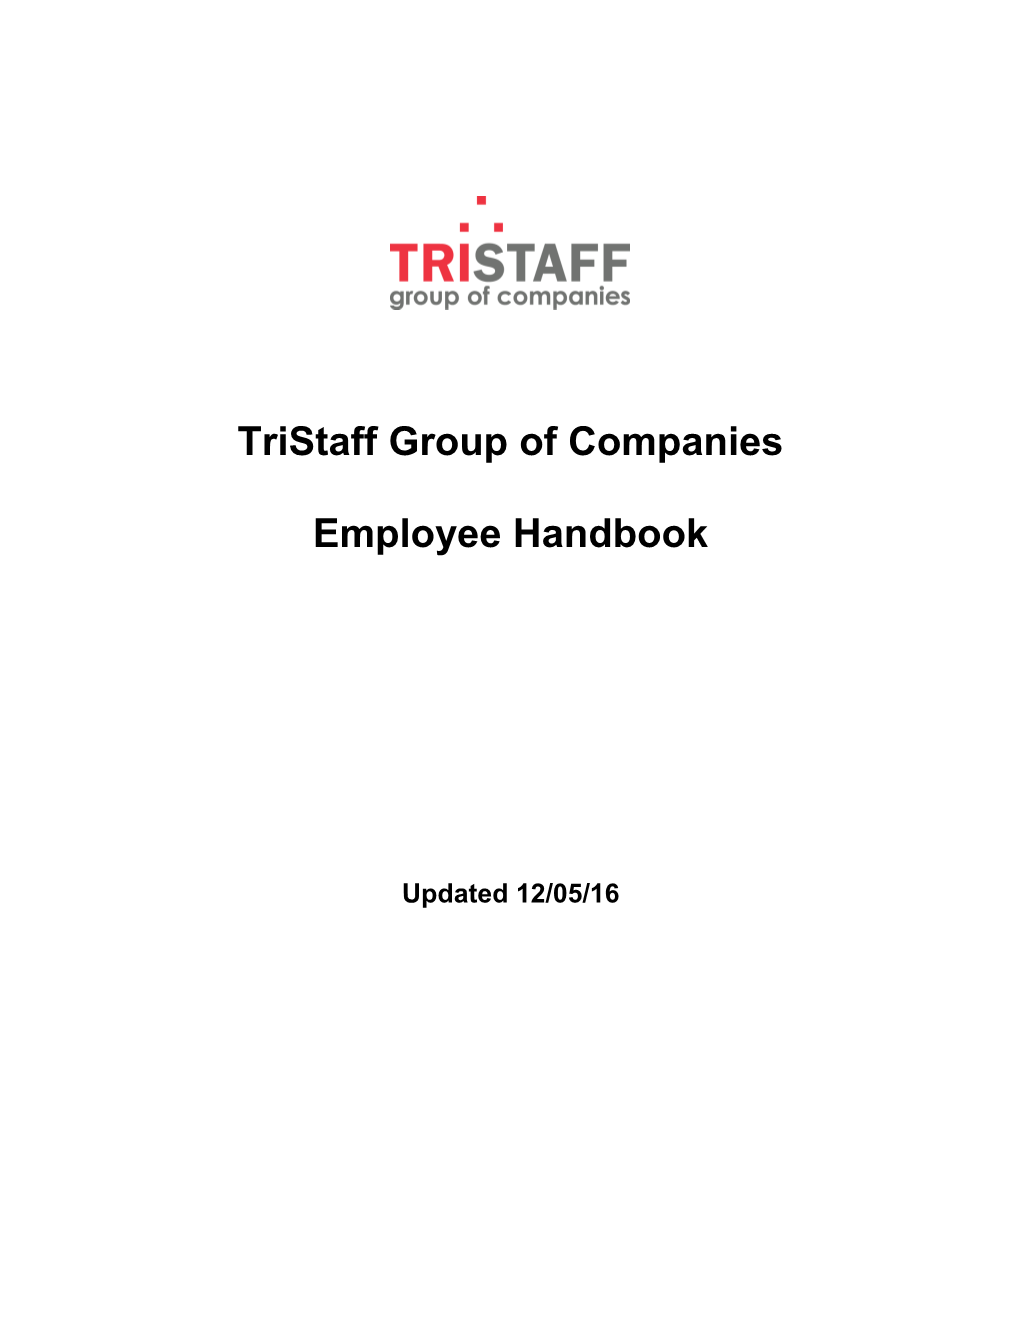 Employee Handbook - Tristaff Group of Companies